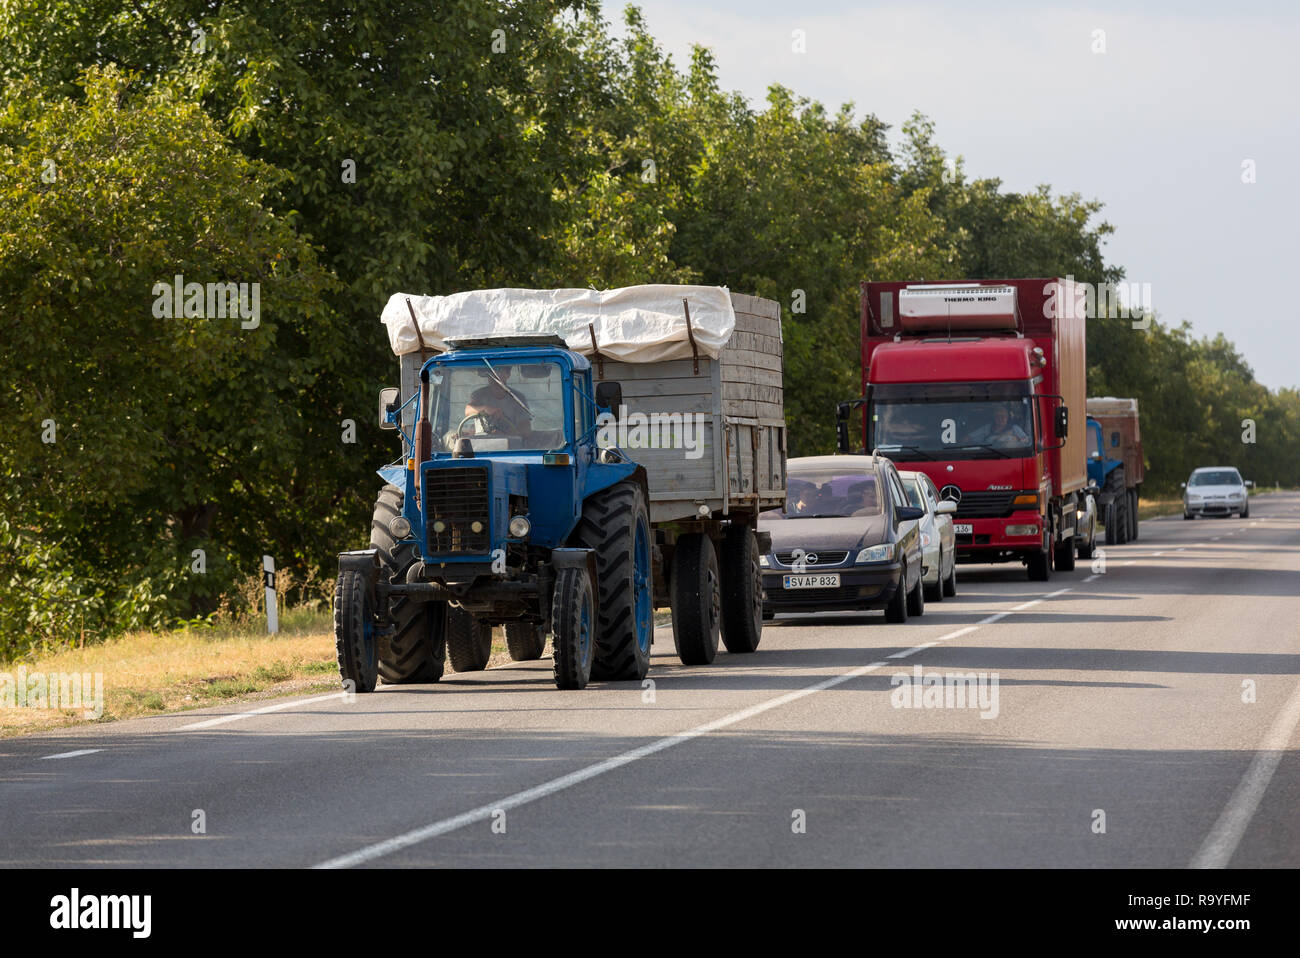 30.8.2016, Olanesti, Rajon Stefan Voda, Republik Moldau - Bauer mit Traktor transportiert Erntegut. Dahinter stauen sich andere Fahrzeuge. 00A160830D Foto de stock